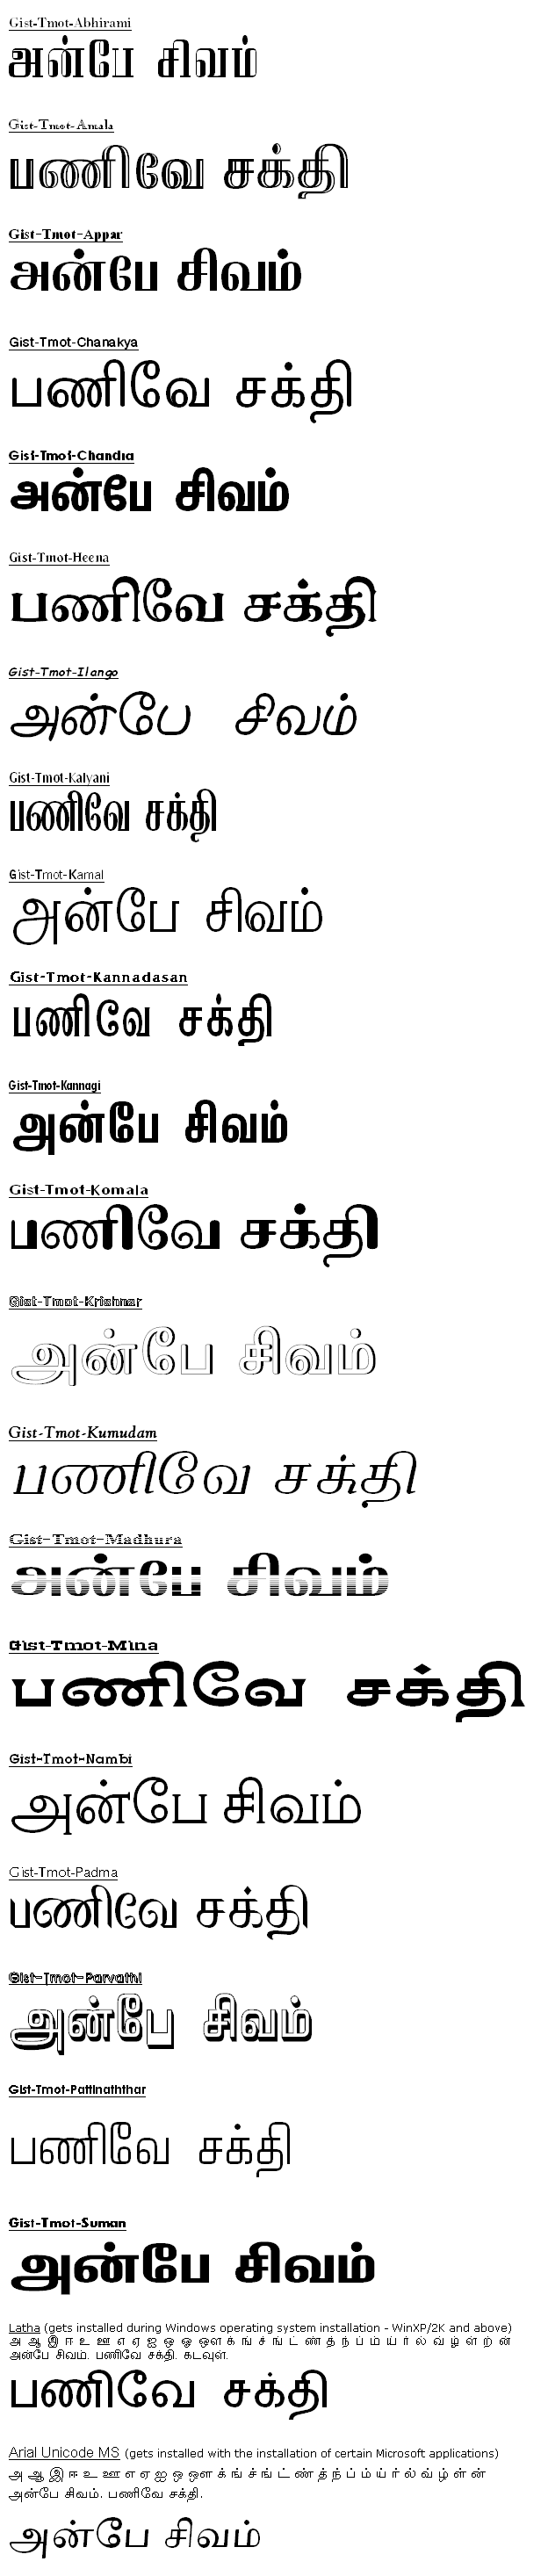 telugu fonts for photoshop cc free download